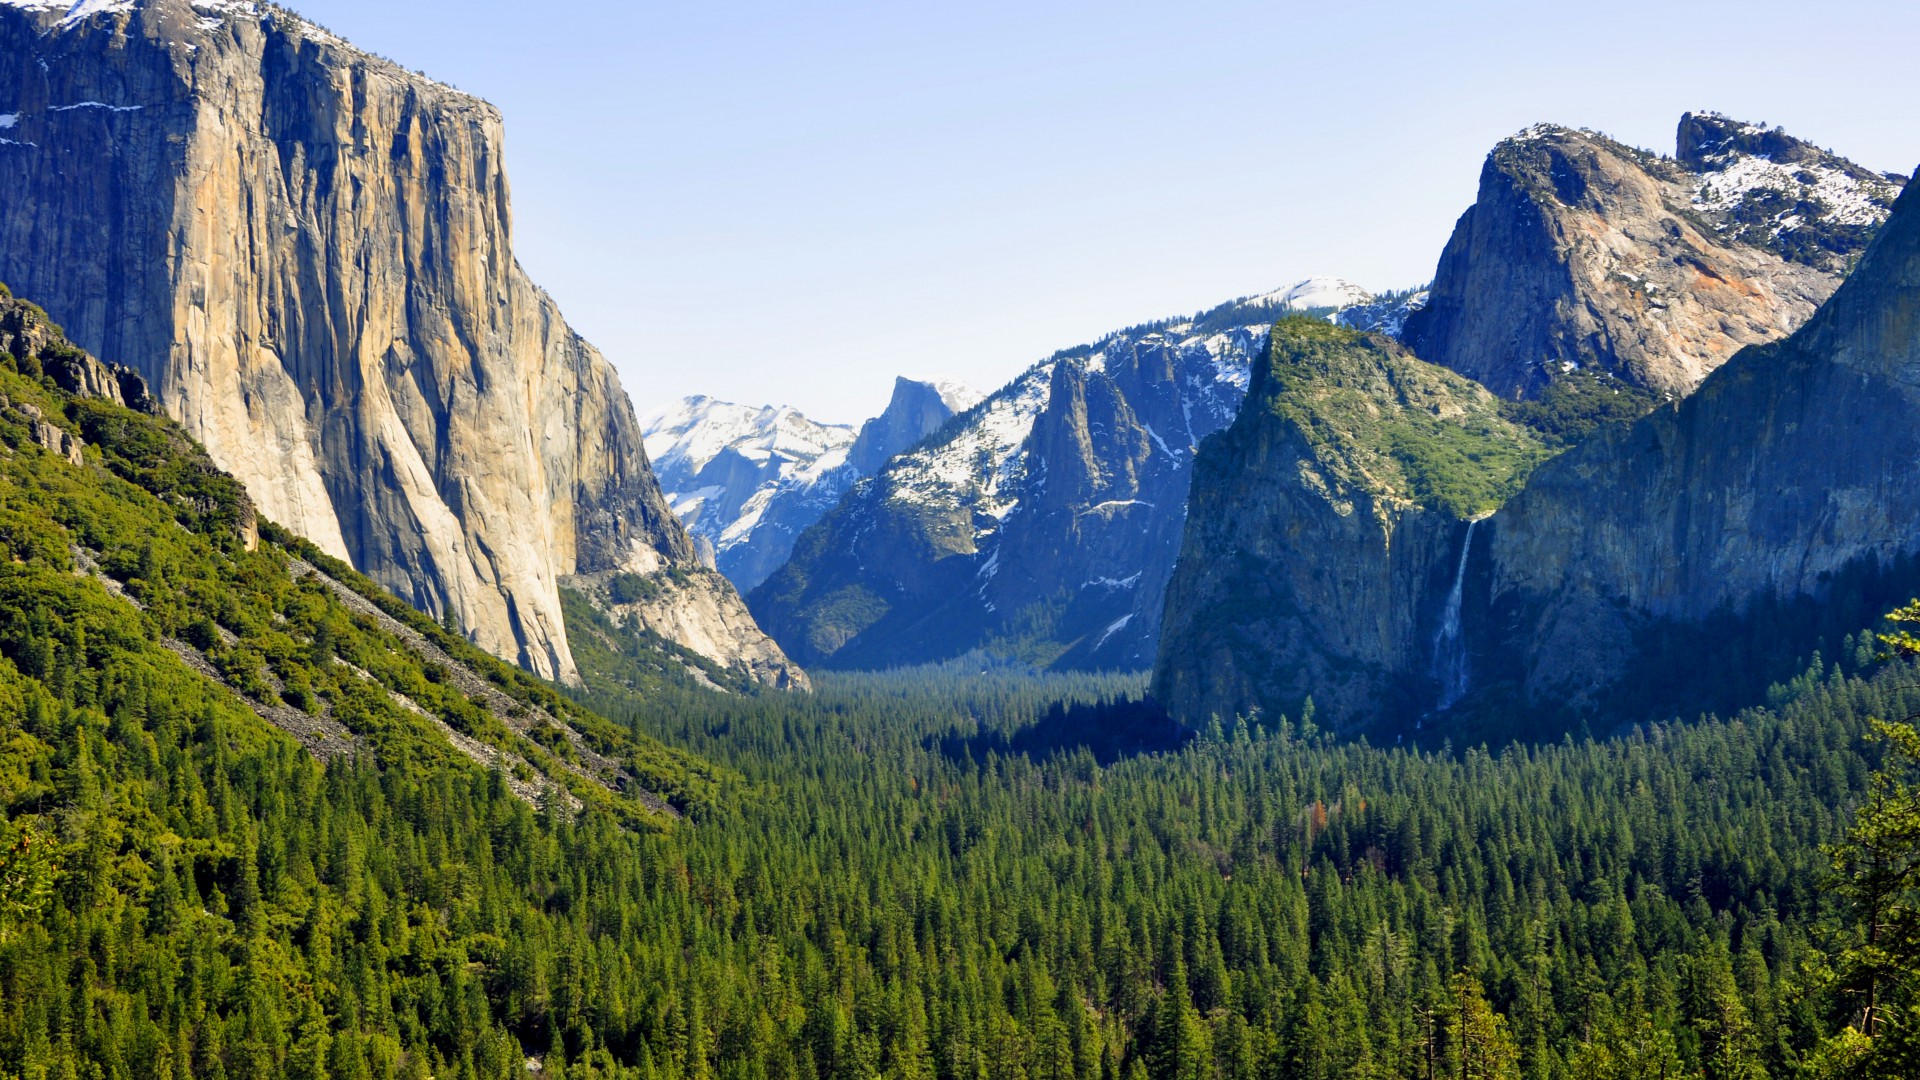 Обои Эпл, 5k, 4k, лес, горы, снег, El Capitan, 5k, 4k wallpaper, Yosemite, forest, OSX, apple, mountains (horizontal)